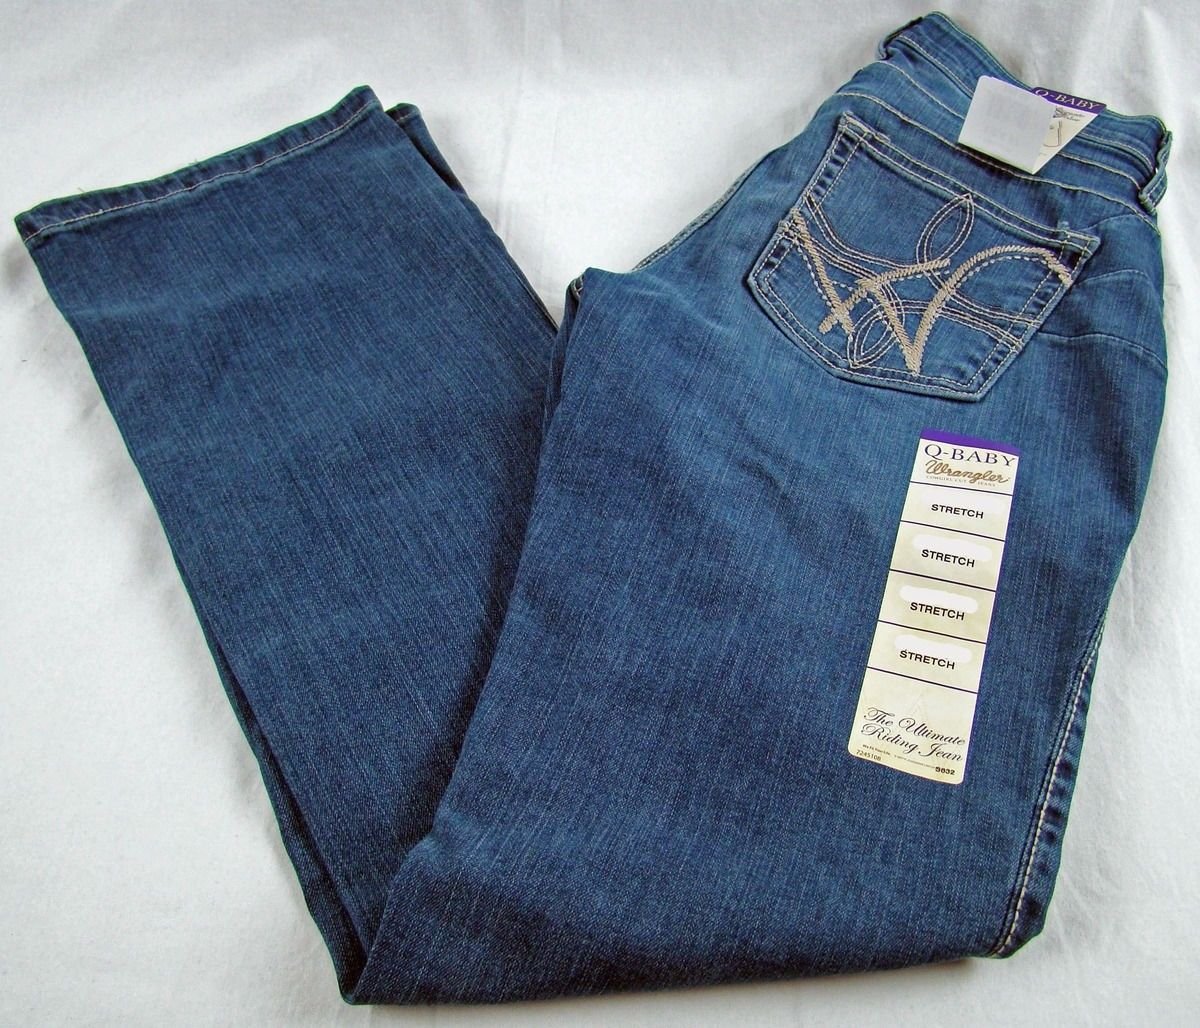 Womens Wrangler Q-Baby Mid Rise Boot Cut Tuff Buck Jeans WRQ20TB Choose Size